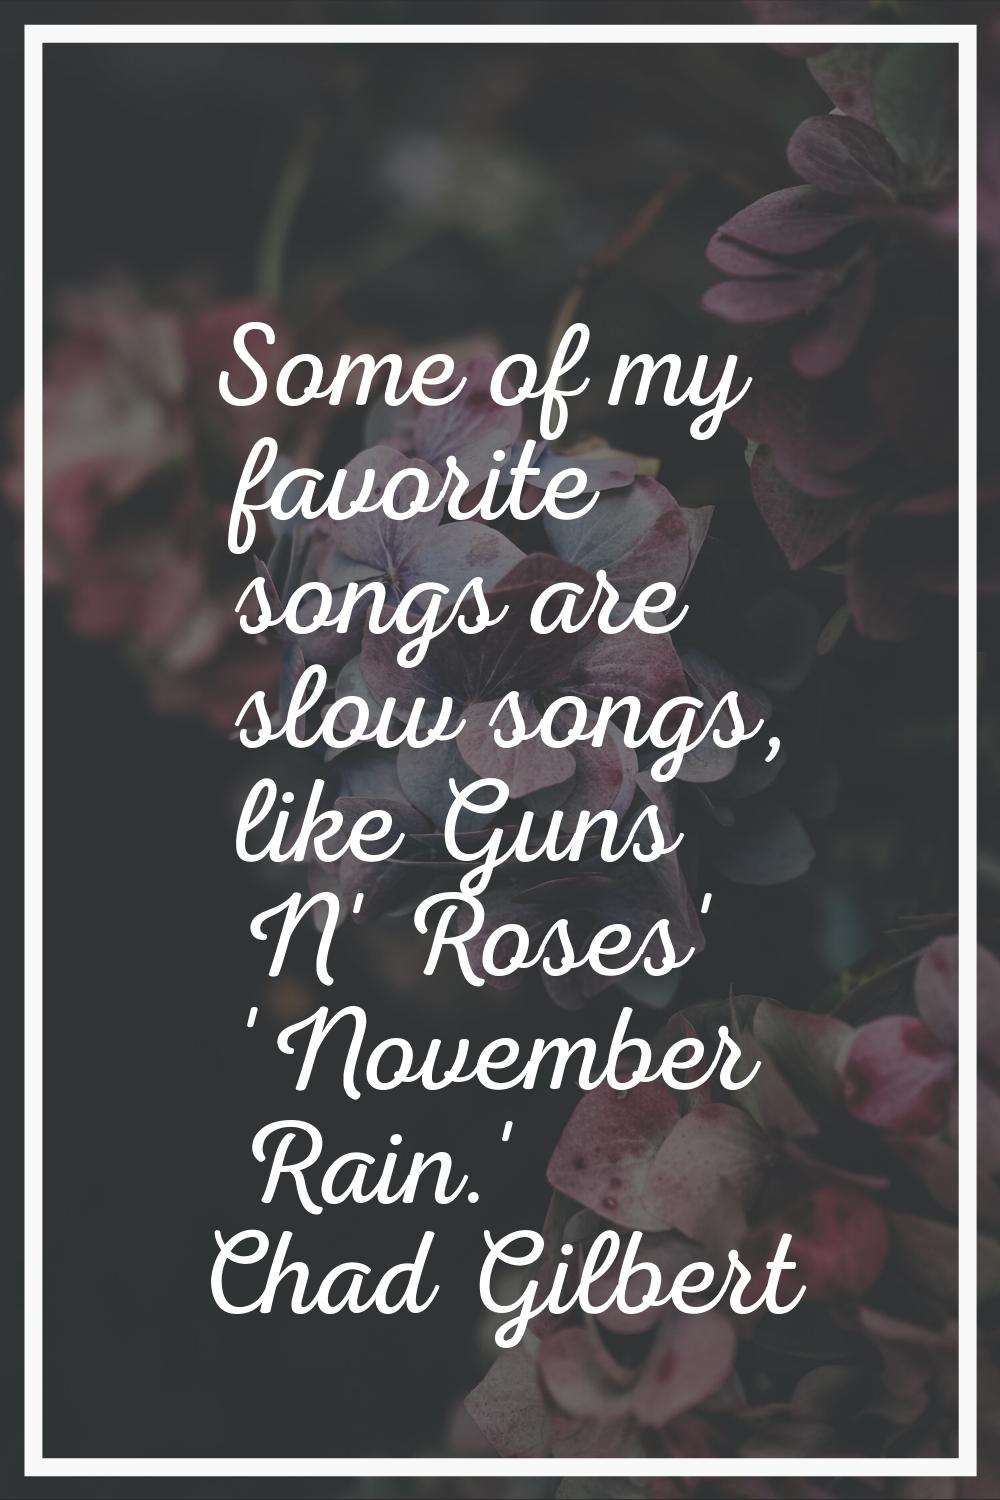 Some of my favorite songs are slow songs, like Guns N' Roses' 'November Rain.'